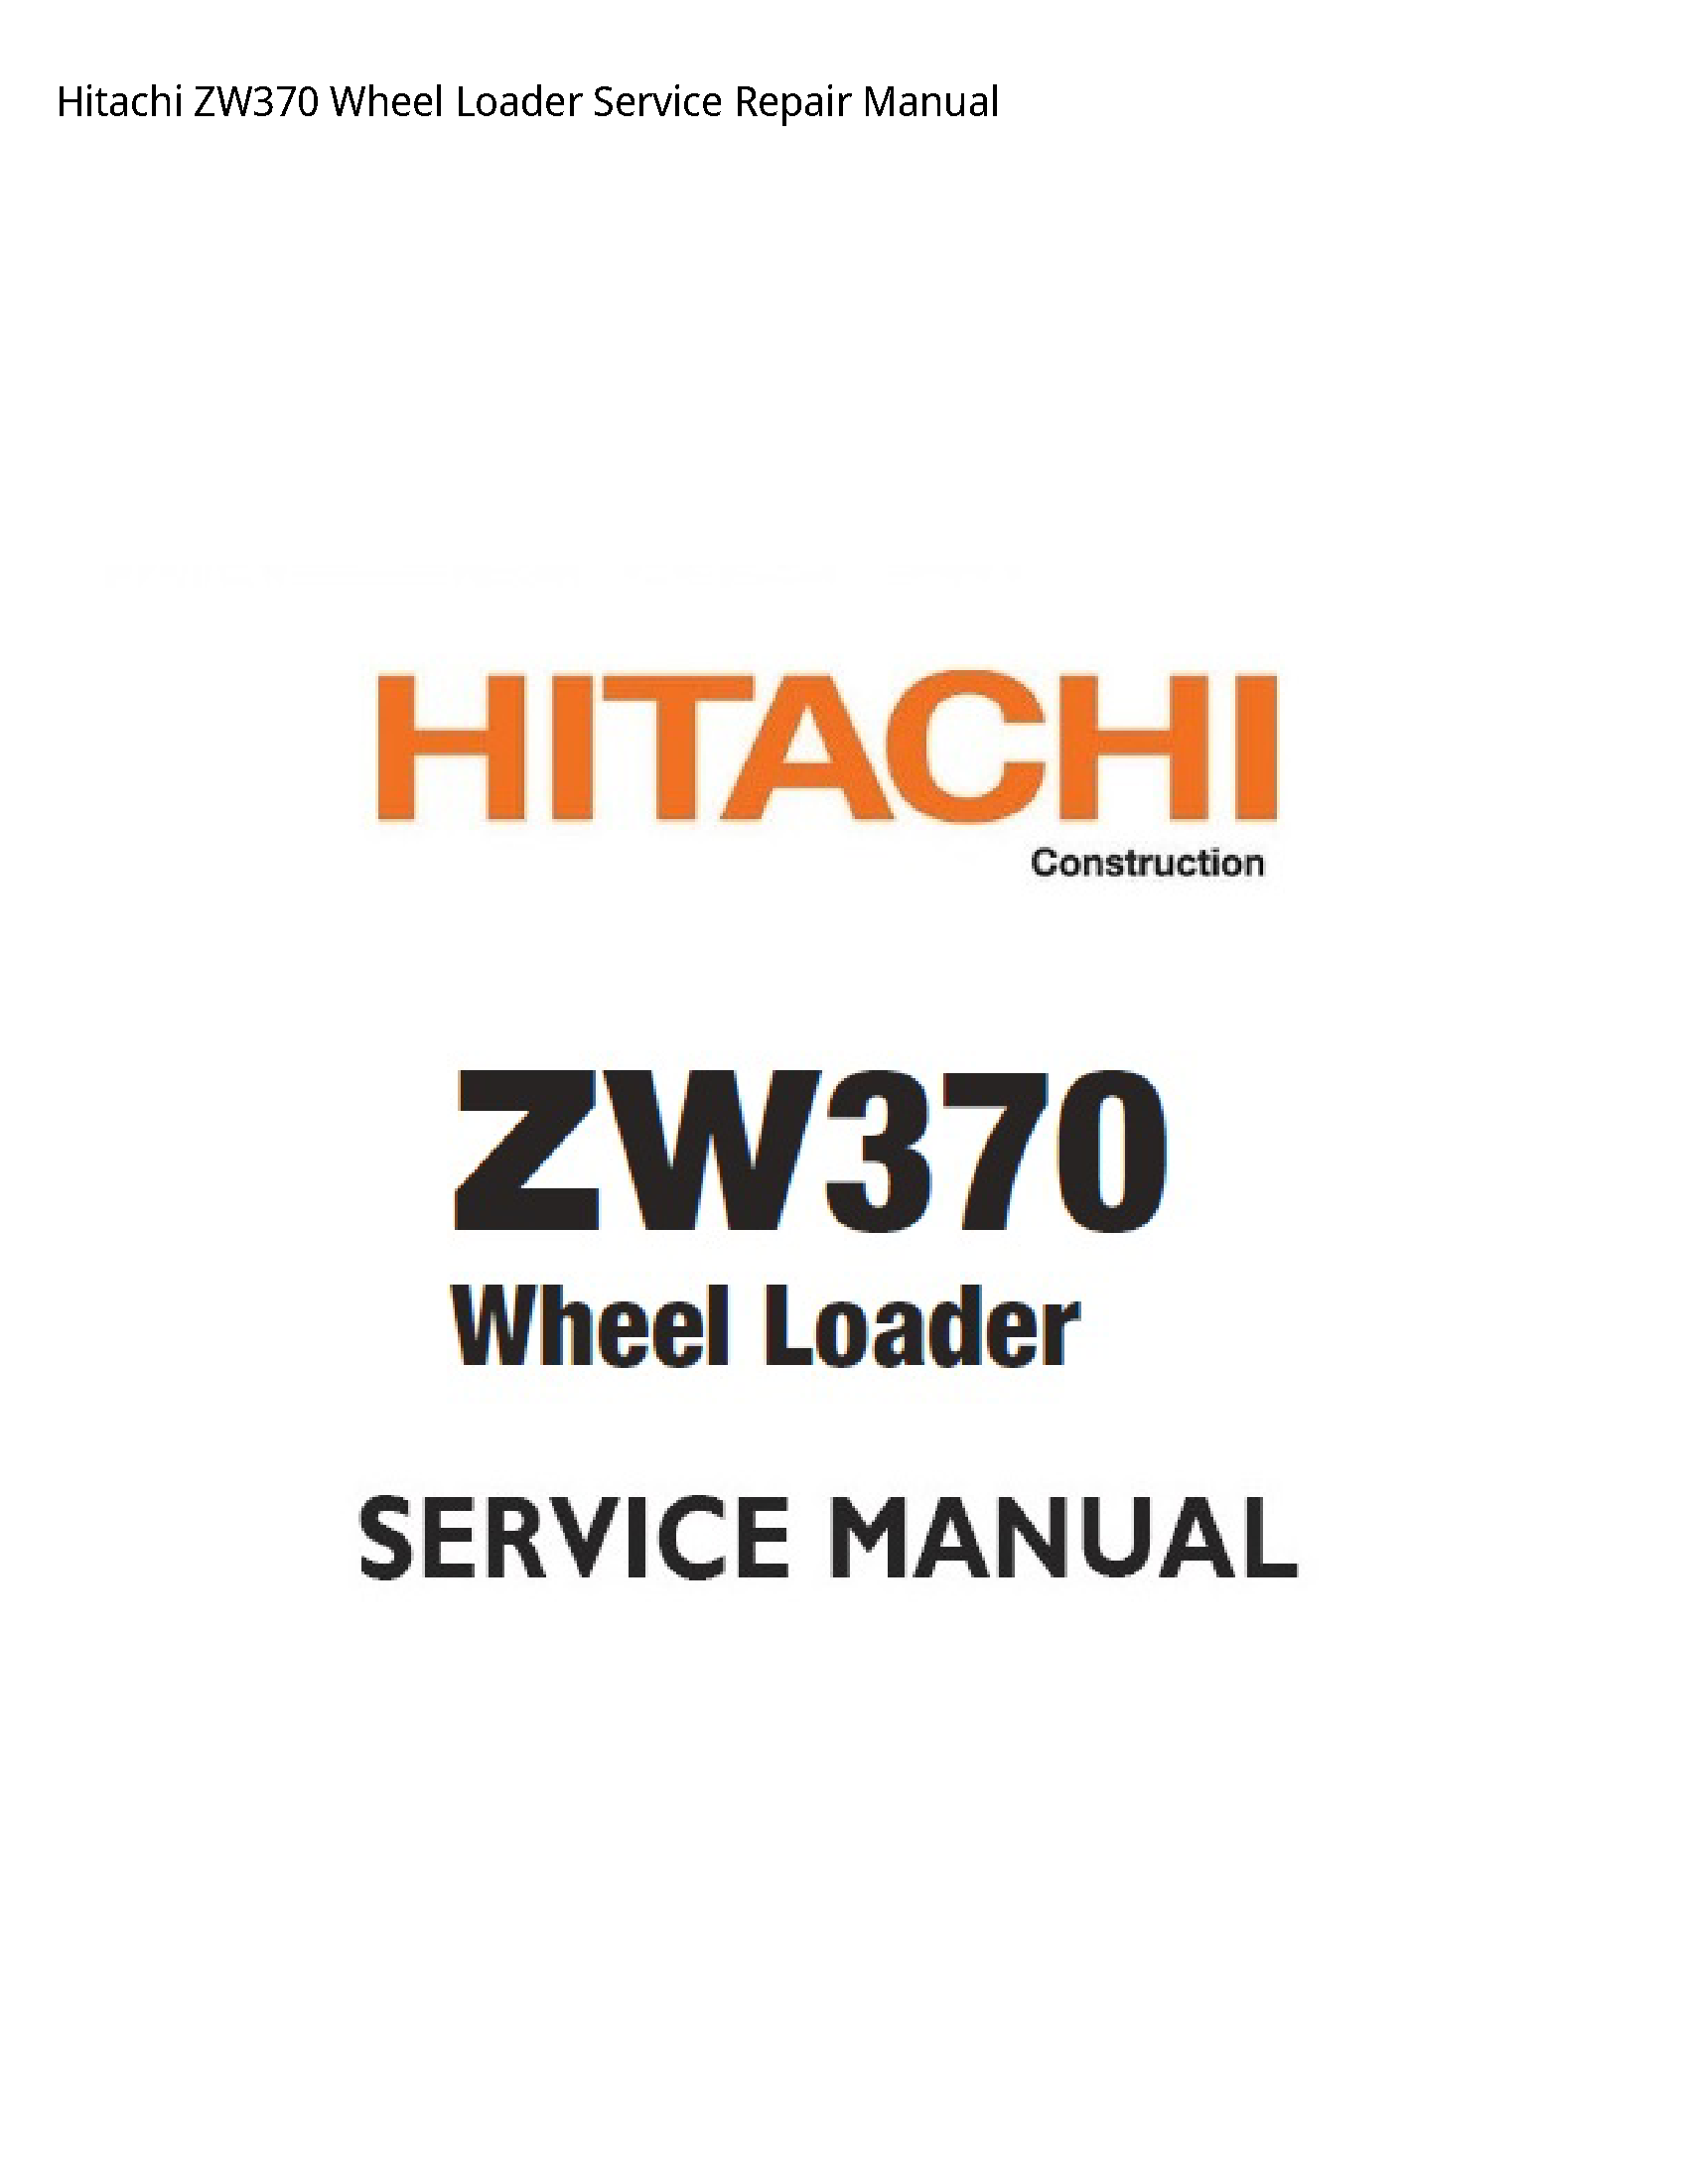 Hitachi ZW370 Wheel Loader manual